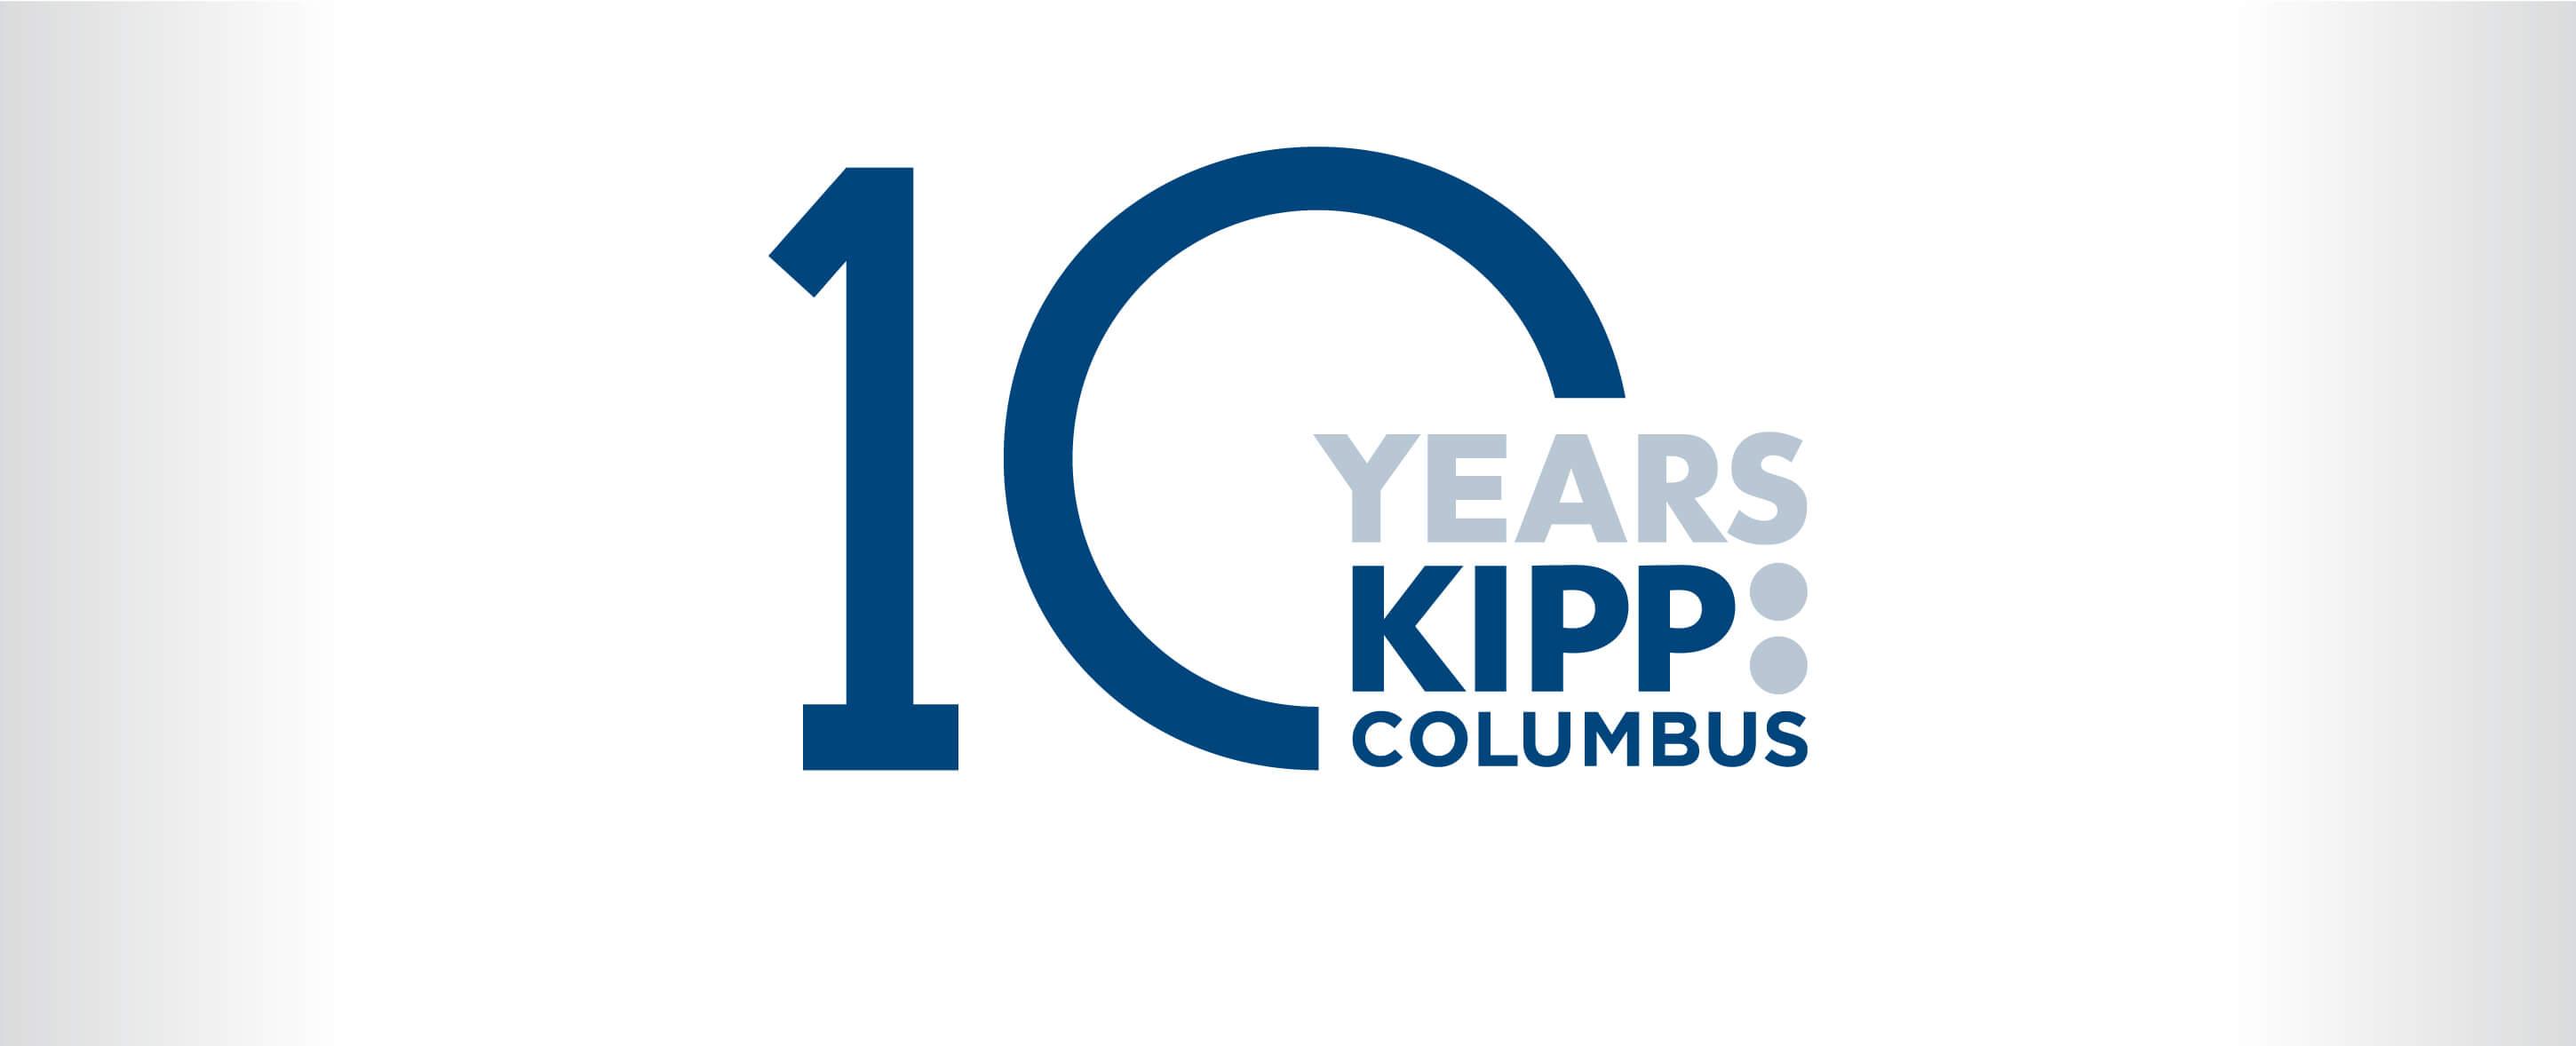 Kipp Logo - KIPP Columbus Celebrates 10 Years